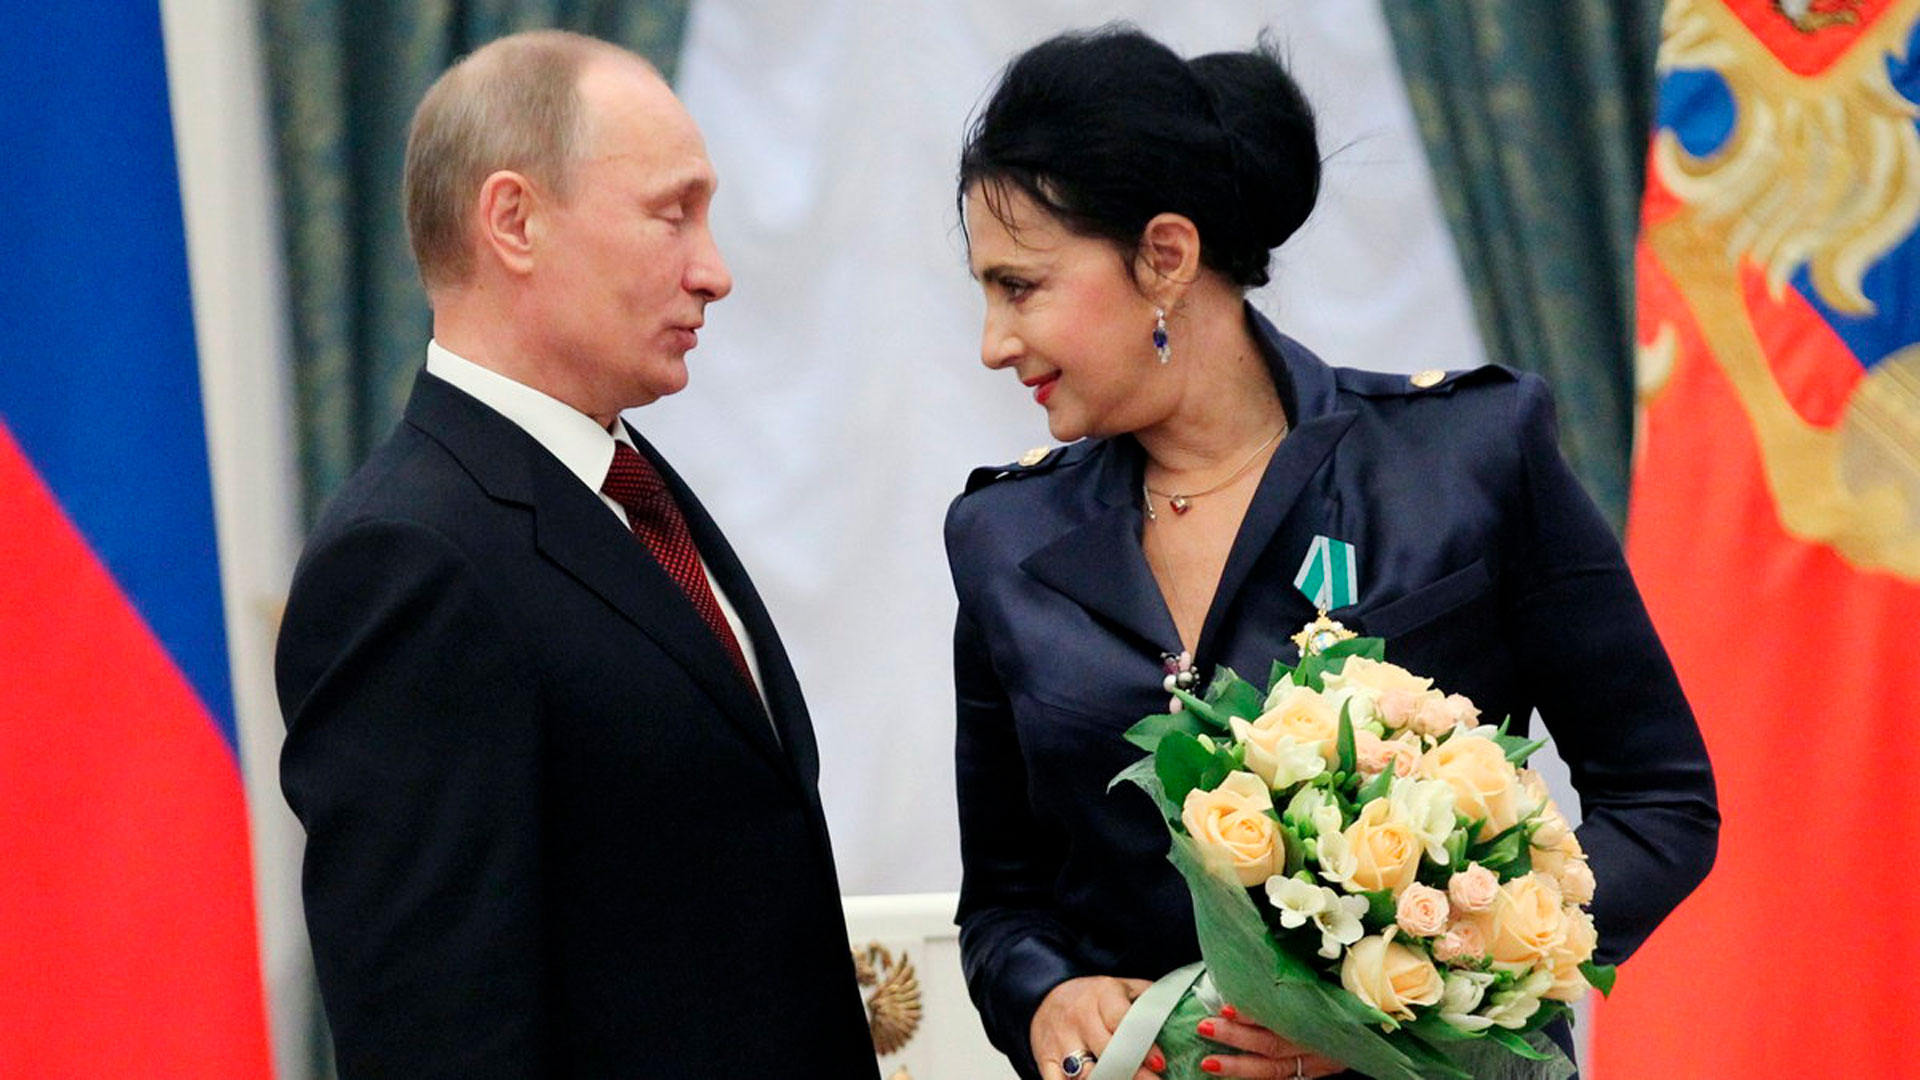 Irina Viner with Vladimir Putin in 2013